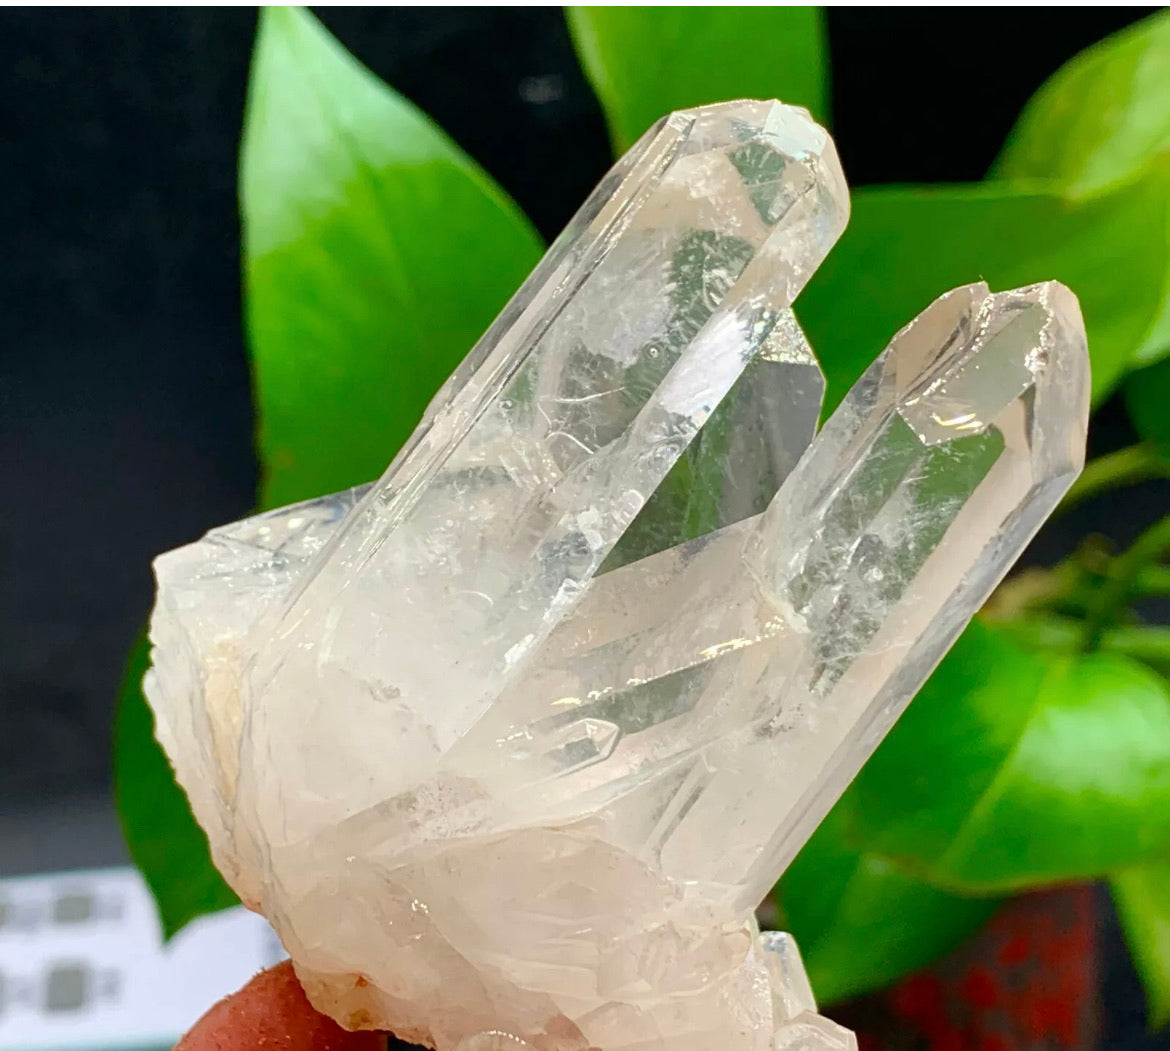 Large Himalayan high-grade quartz clusters / mineralsls healing